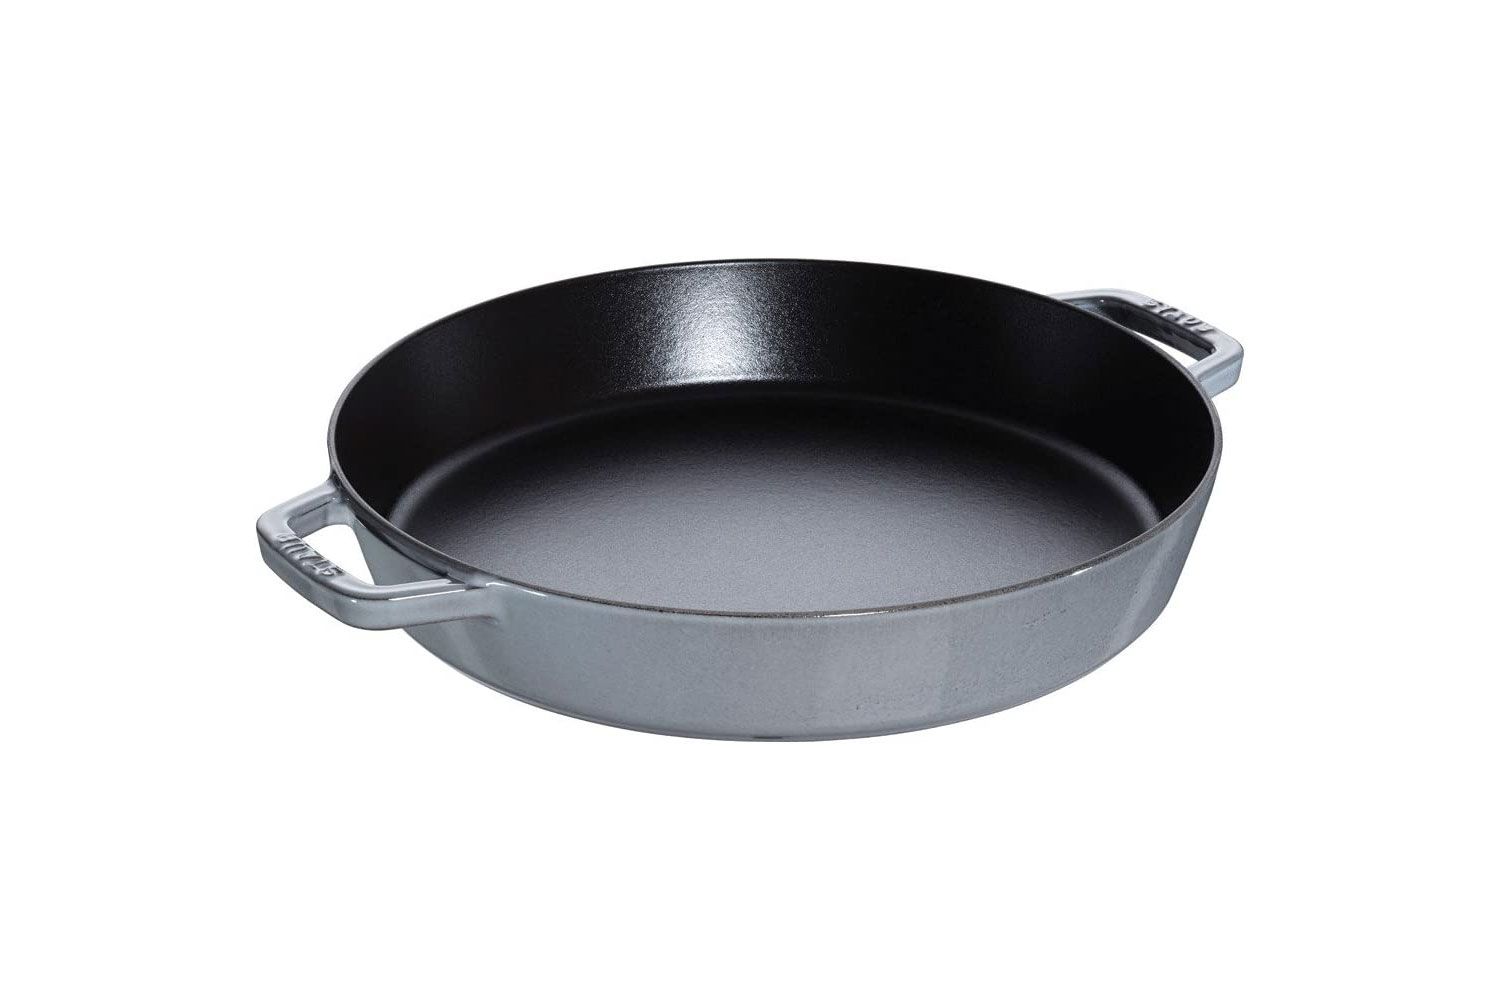 Staub-13-inch-double-handle-fry-pan